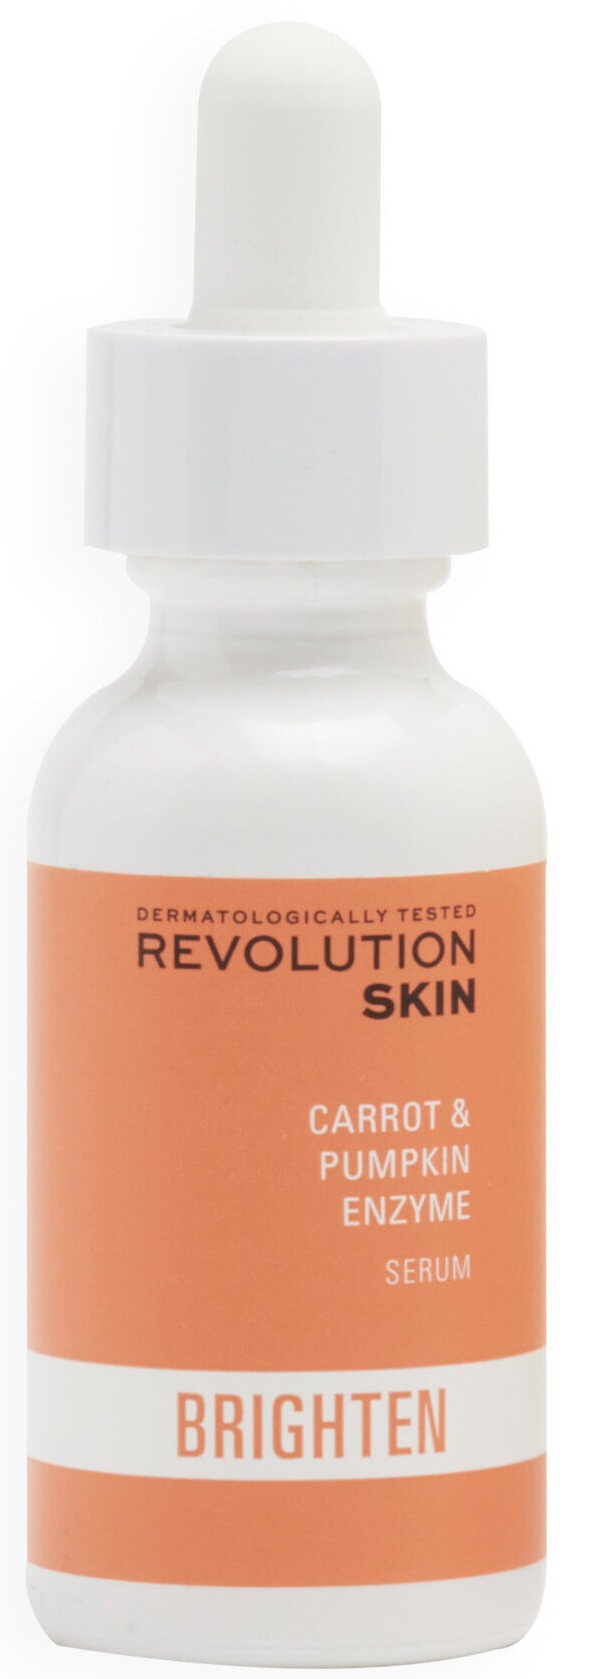 Revolution Skincare Brighten Carrot & Pumpkin Enzyme Serum